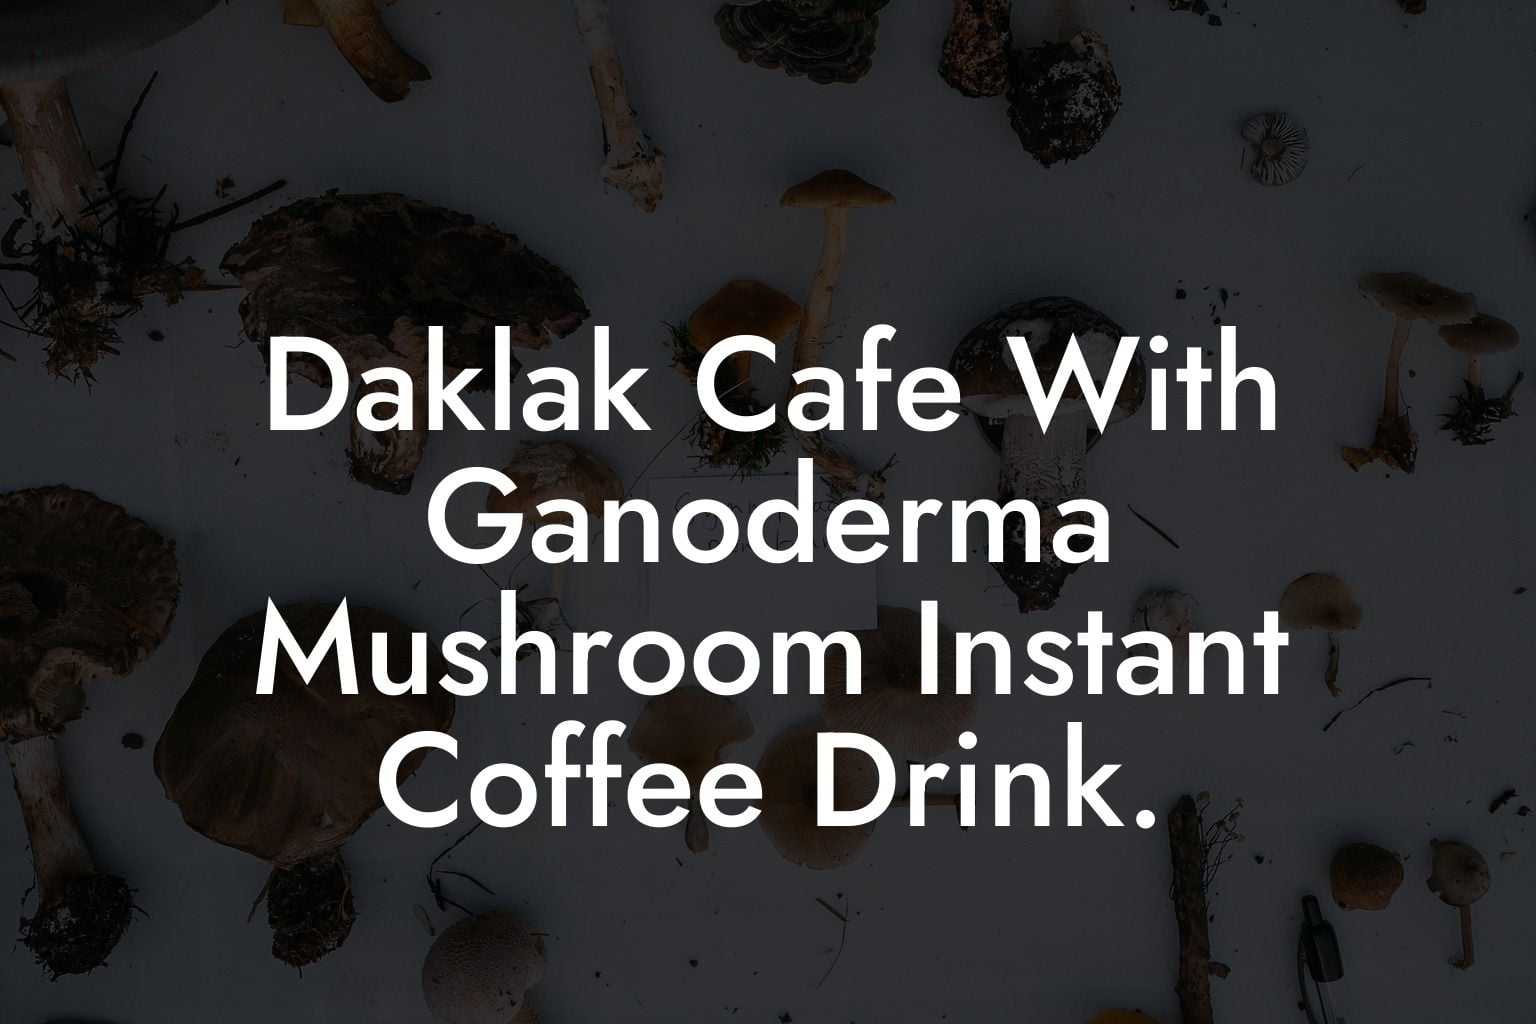 Daklak Cafe With Ganoderma Mushroom Instant Coffee Drink.